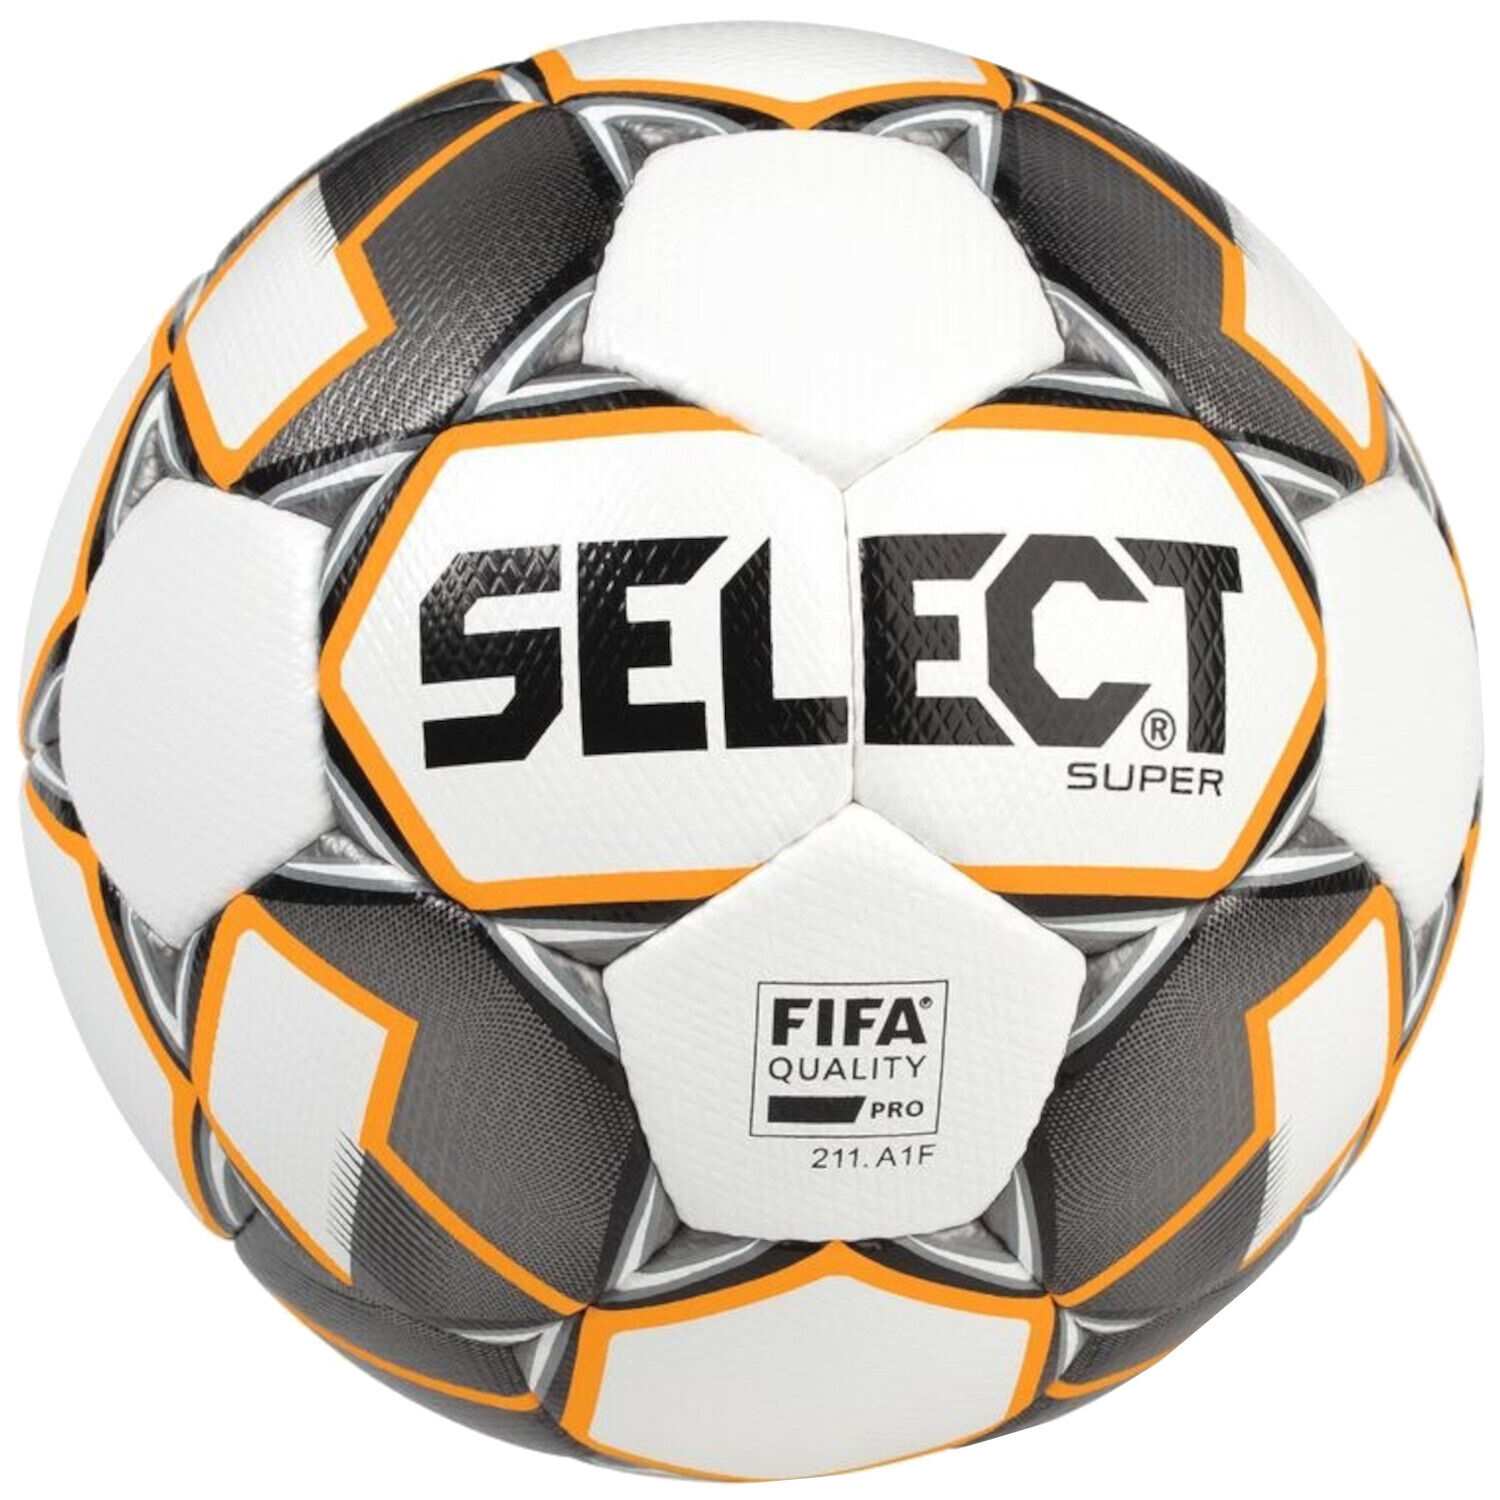 Select Super Fifa Quality Pro